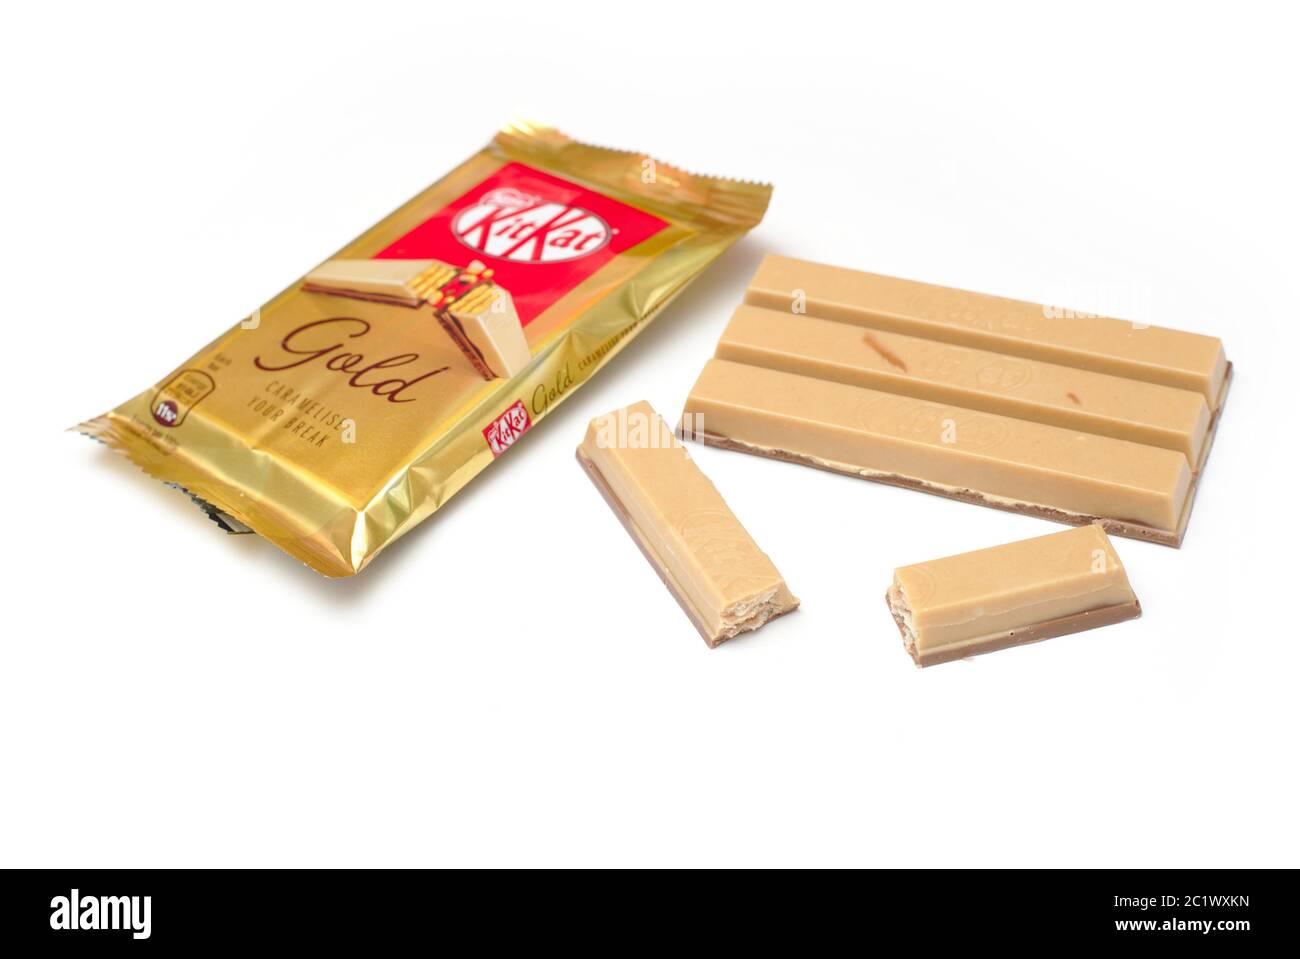 Kit Kat gold, UK limited edition Stock Photo